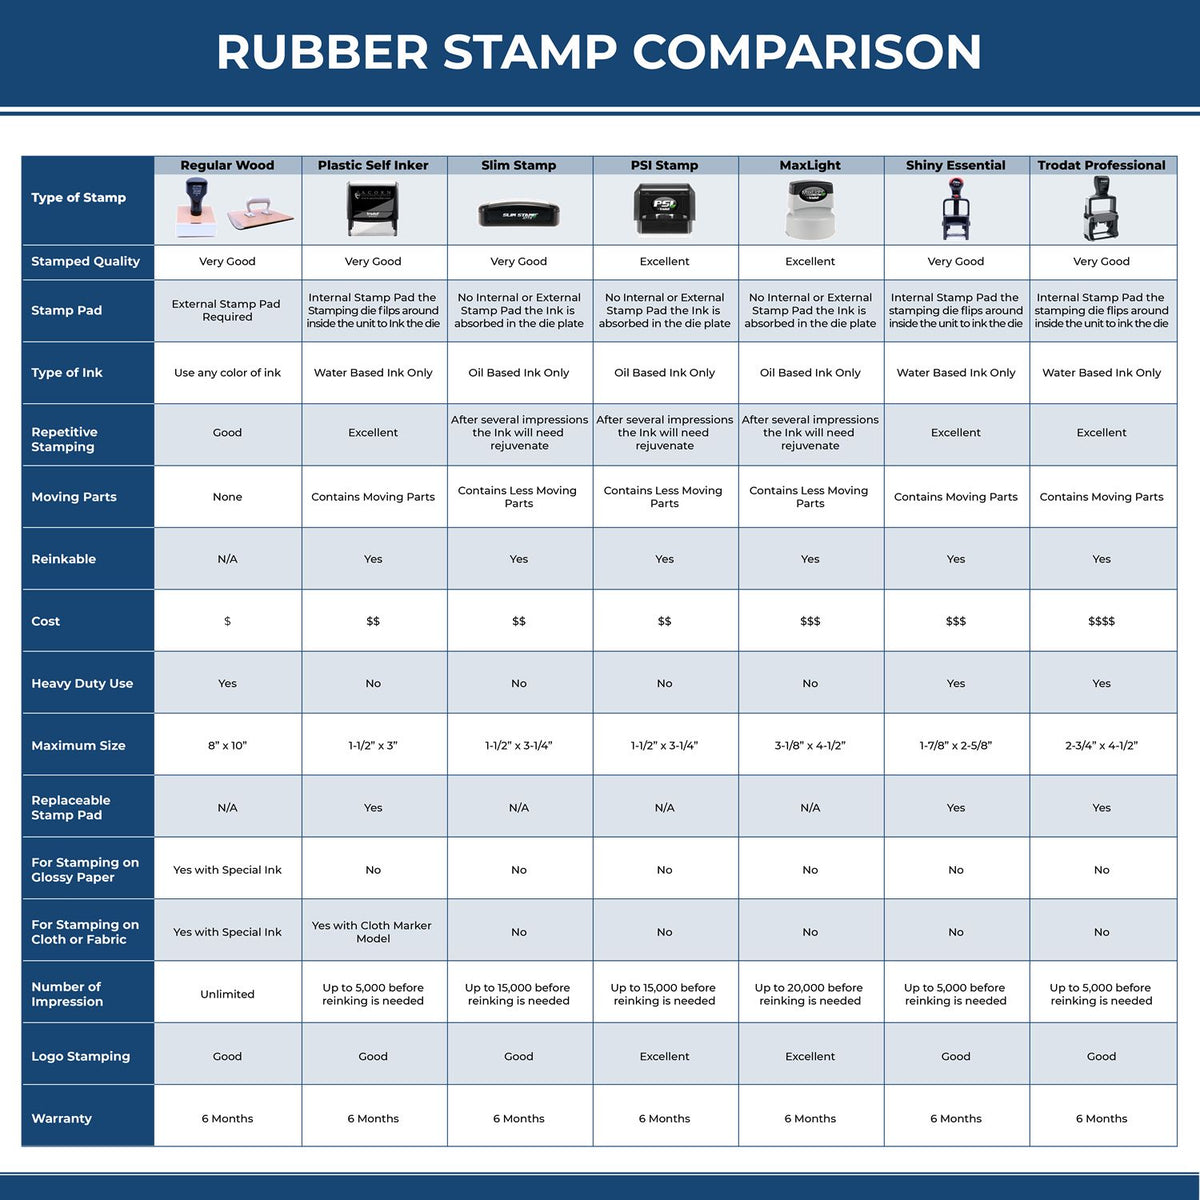 Large Parcel Post Rubber Stamp 4943R Rubber Stamp Comparison